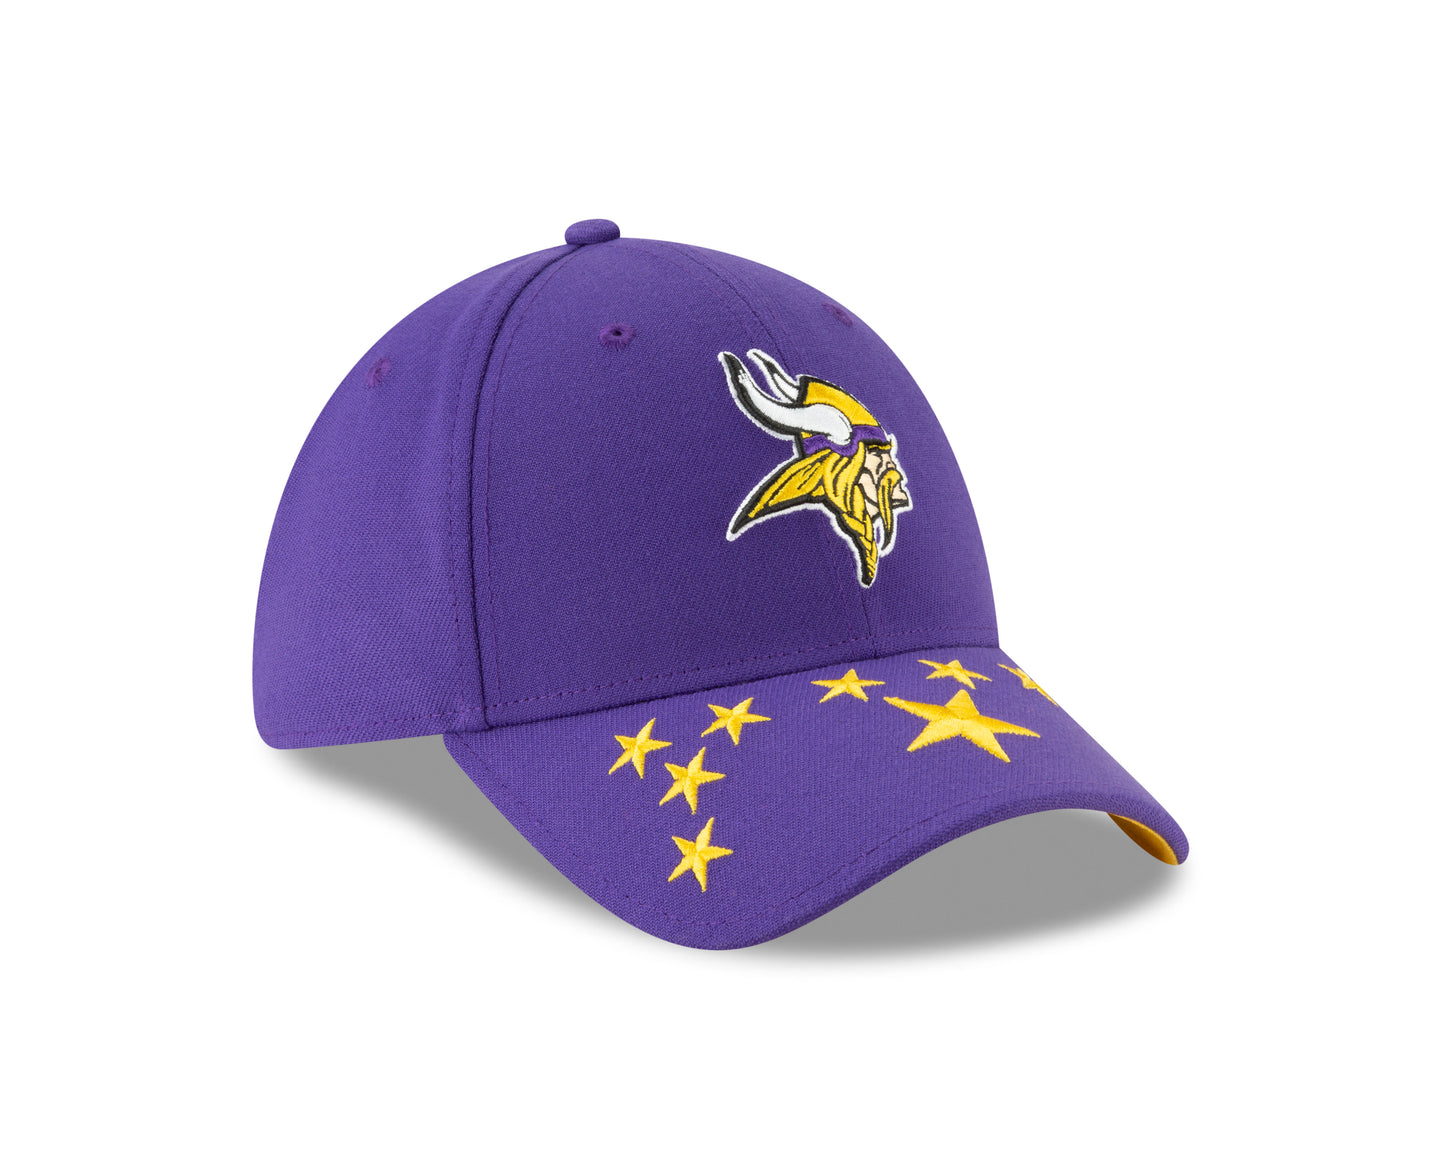 Minnesota Vikings New Era 2019 NFL Draft On-Stage Official 39THIRTY Flex Hat